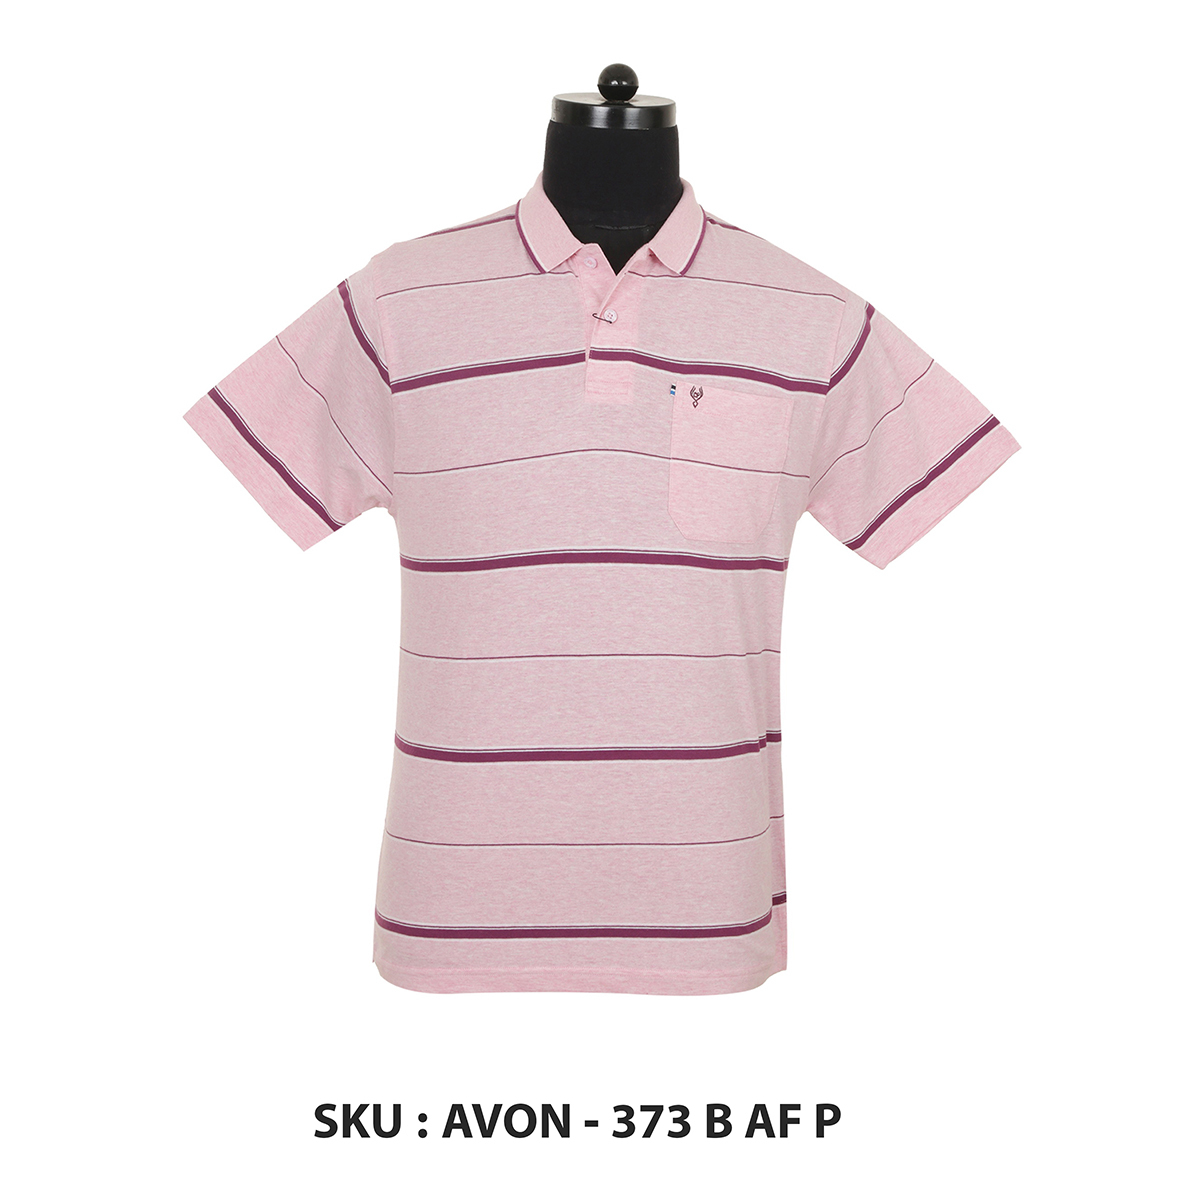 Classic Polo Mens T Shirt Avon - 373 B Af P Pink M